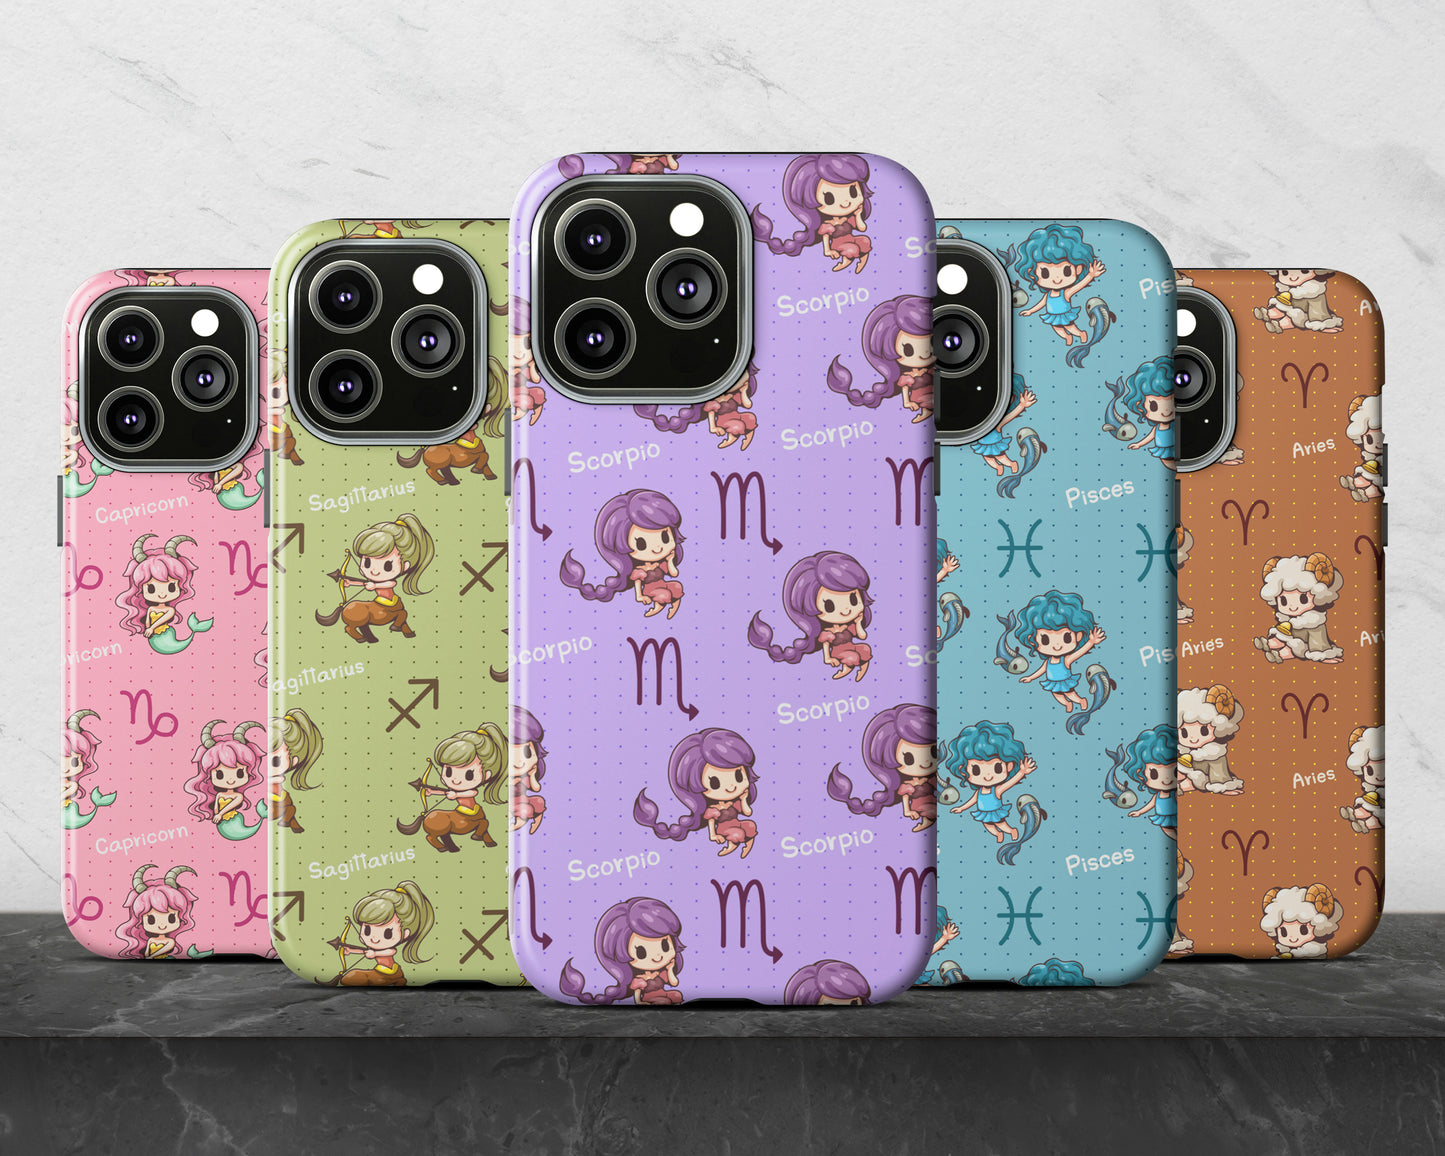 Aries Zodiac sign cute cartoon girl iPhone case